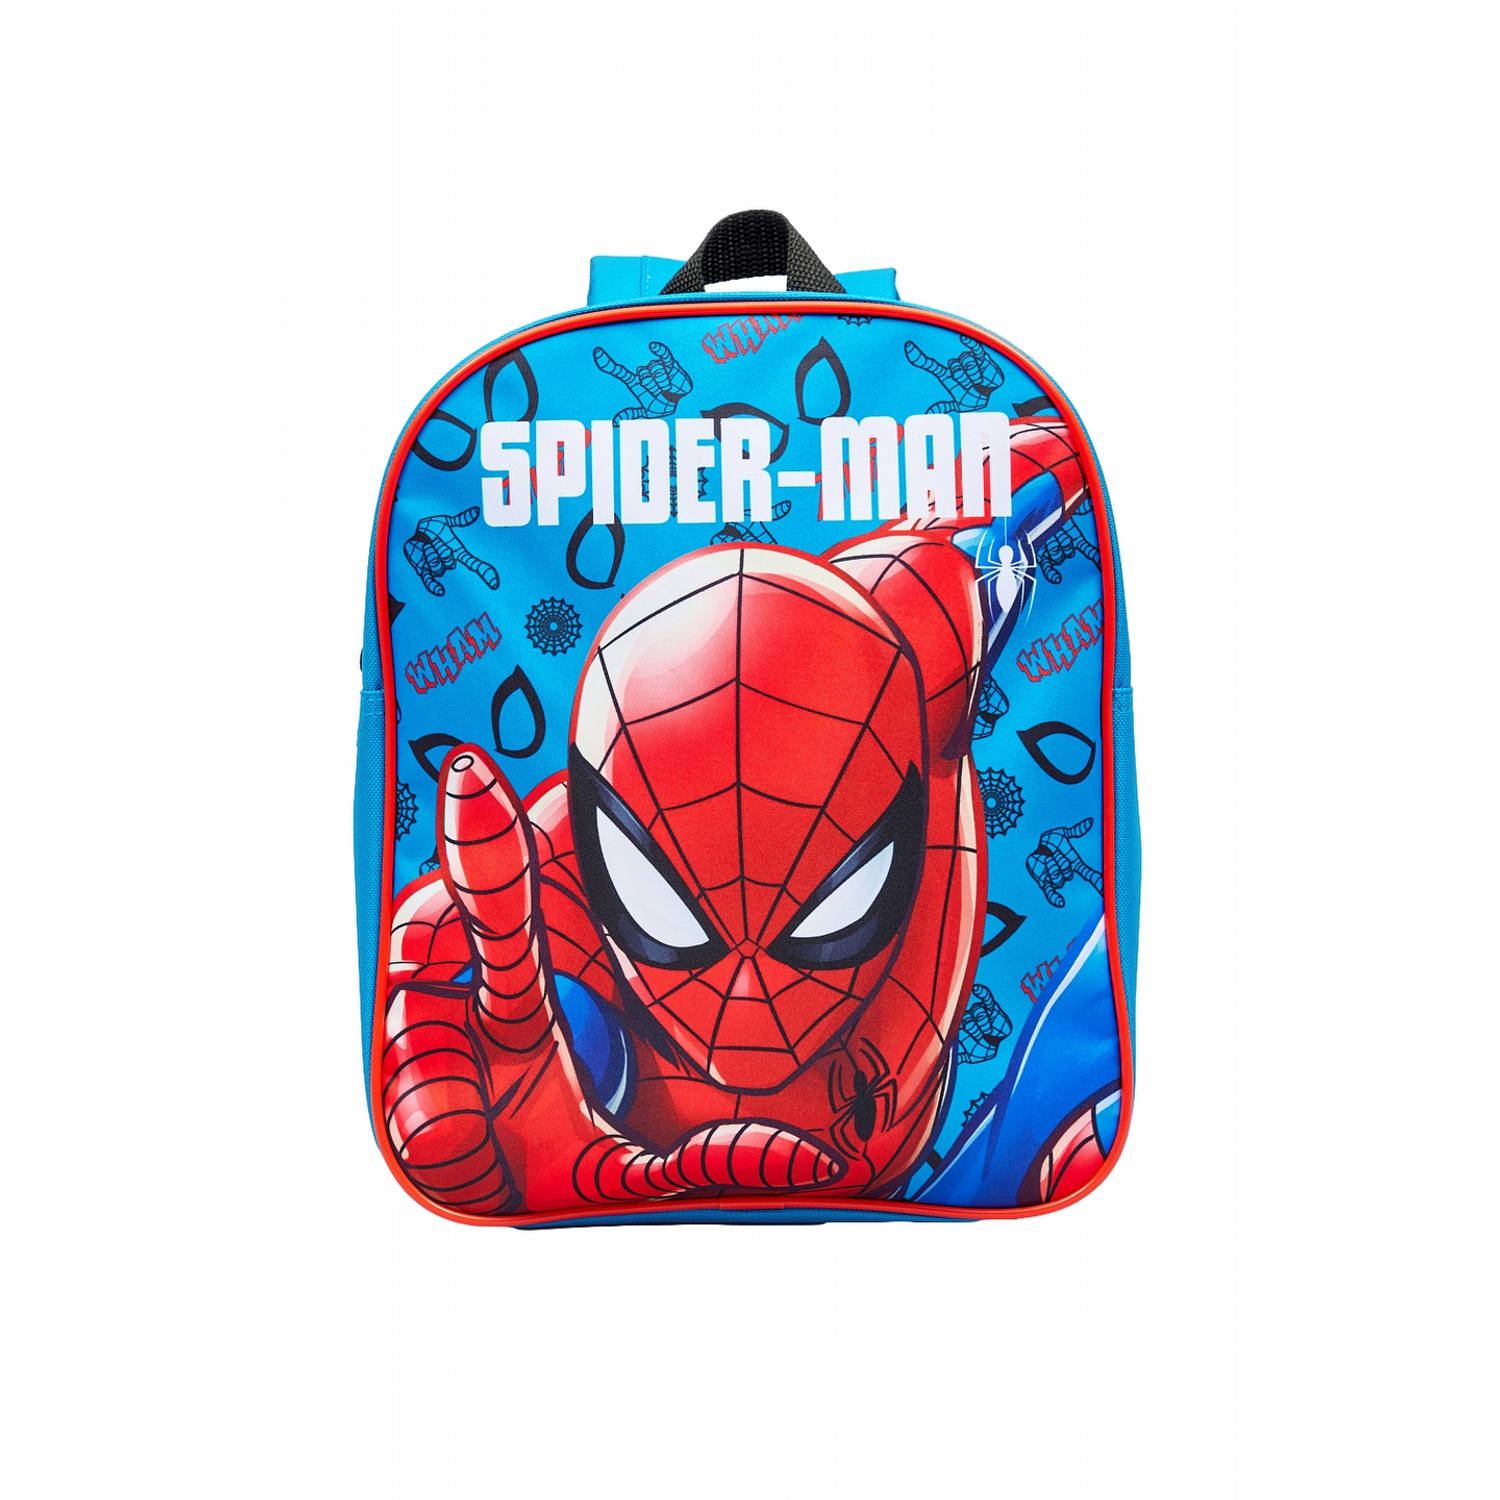 Spiderman peuter rugzak 30x25x9